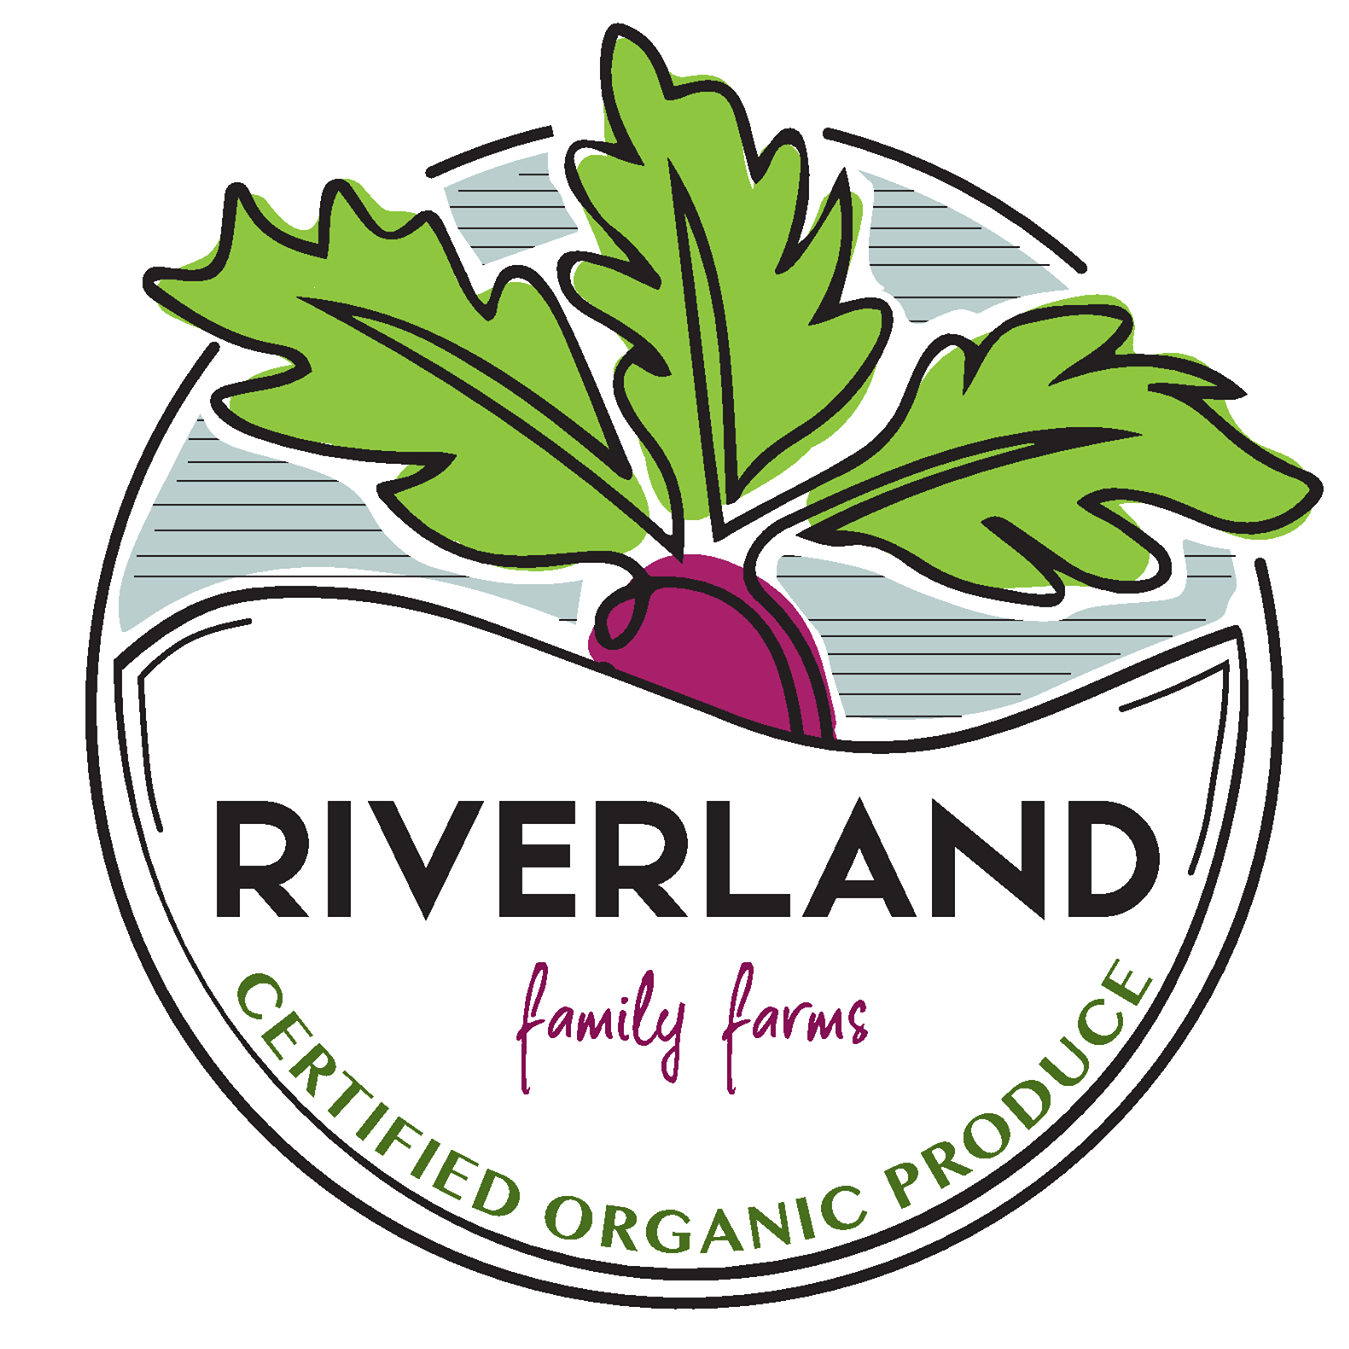 Riverland Family Farms